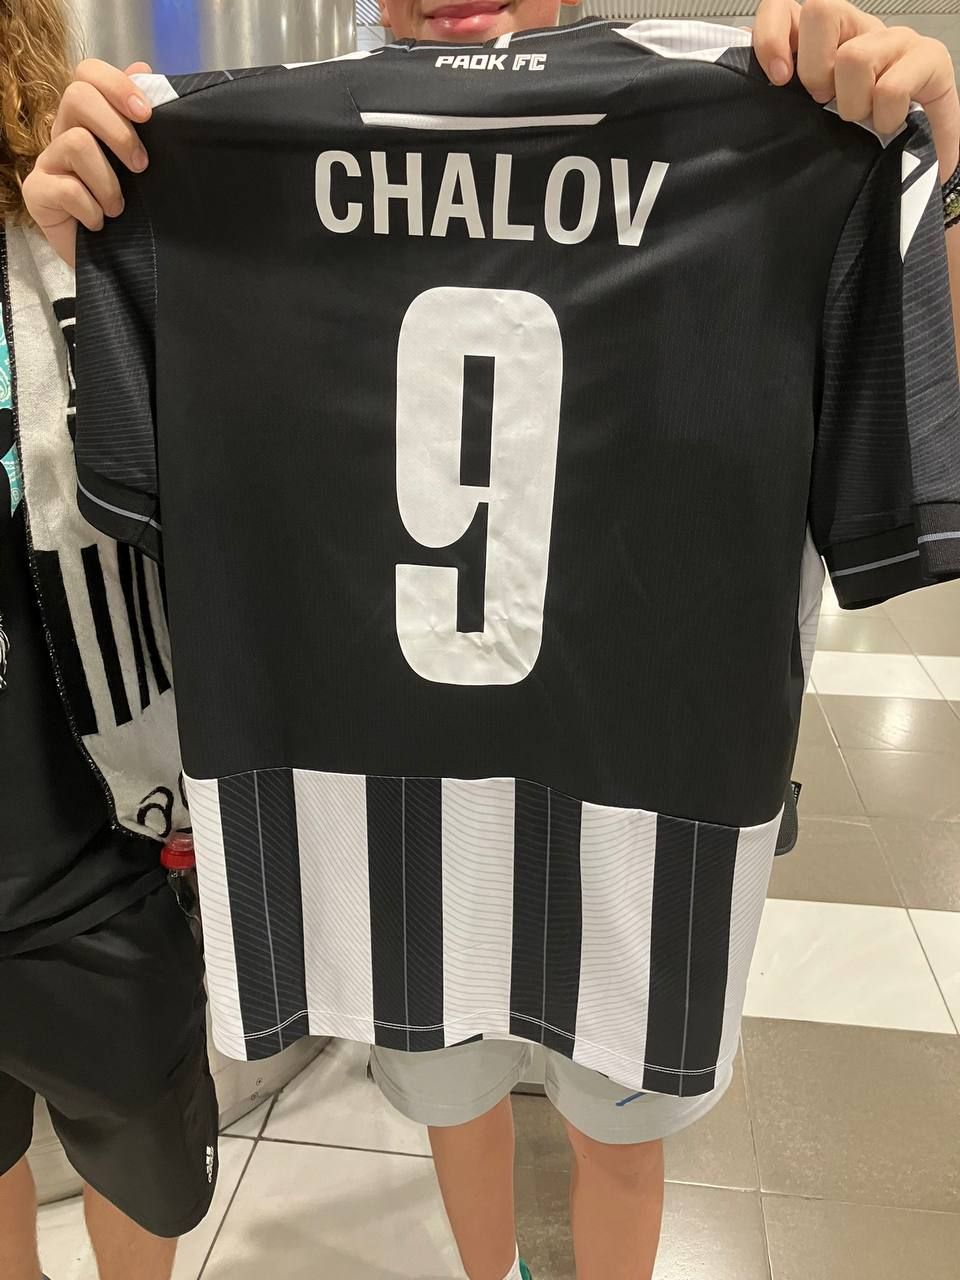 В Греции опубликовали фото футболки ПАОК с фамилией Чалова и номером 9